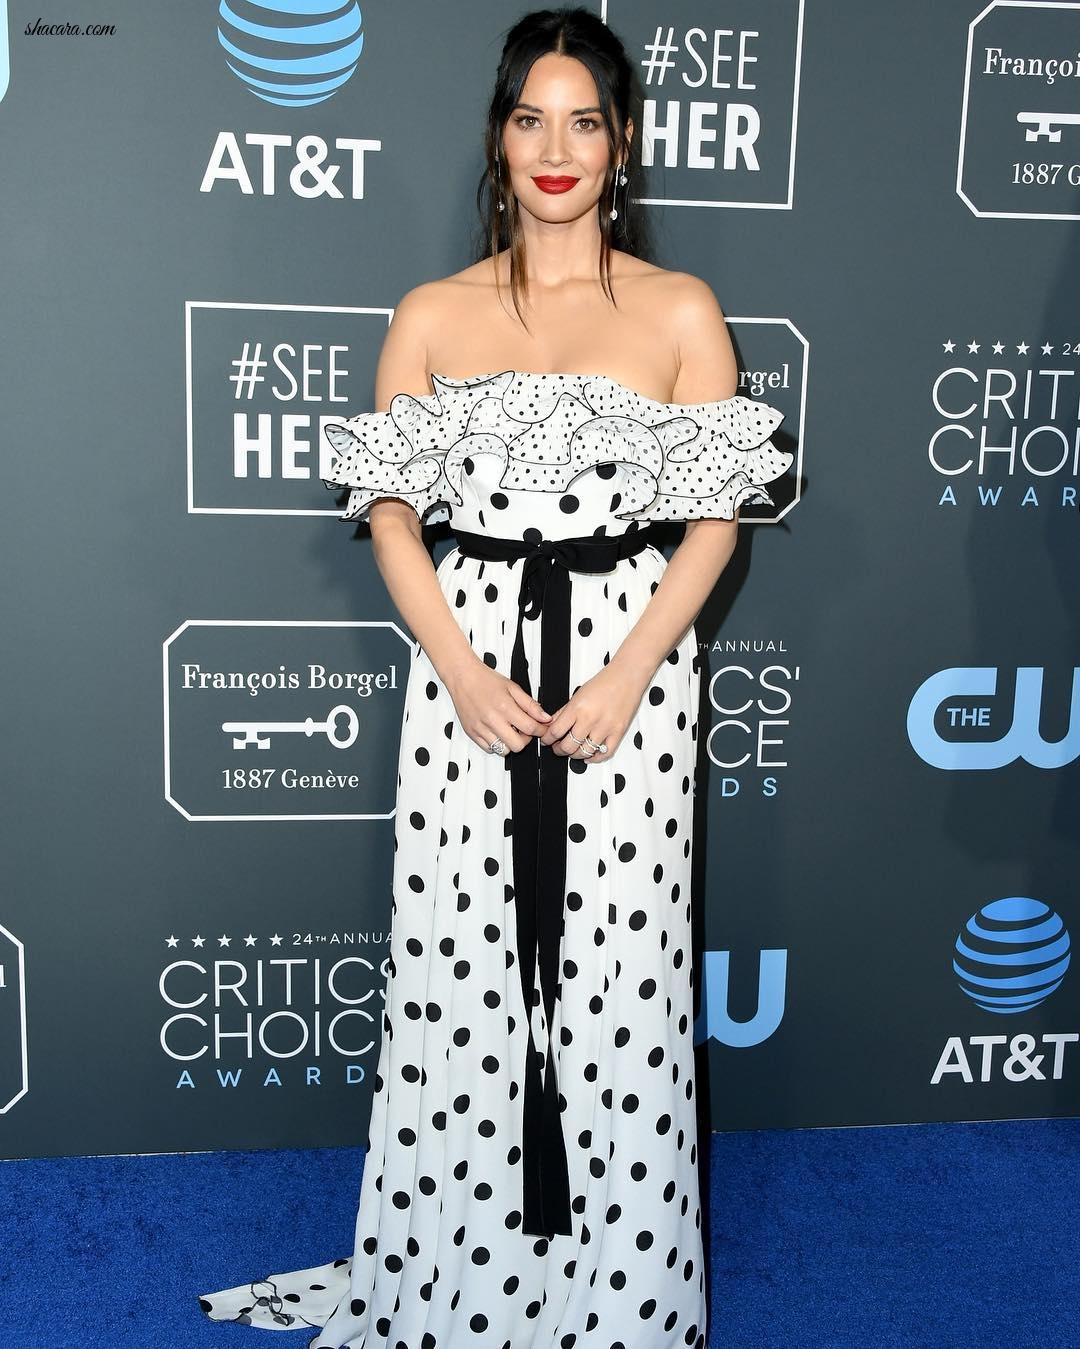 Critic Choice Awards 2019: Lady Gaga, Regina King, Chrissy Teigen & More Slay The Blue Carpet